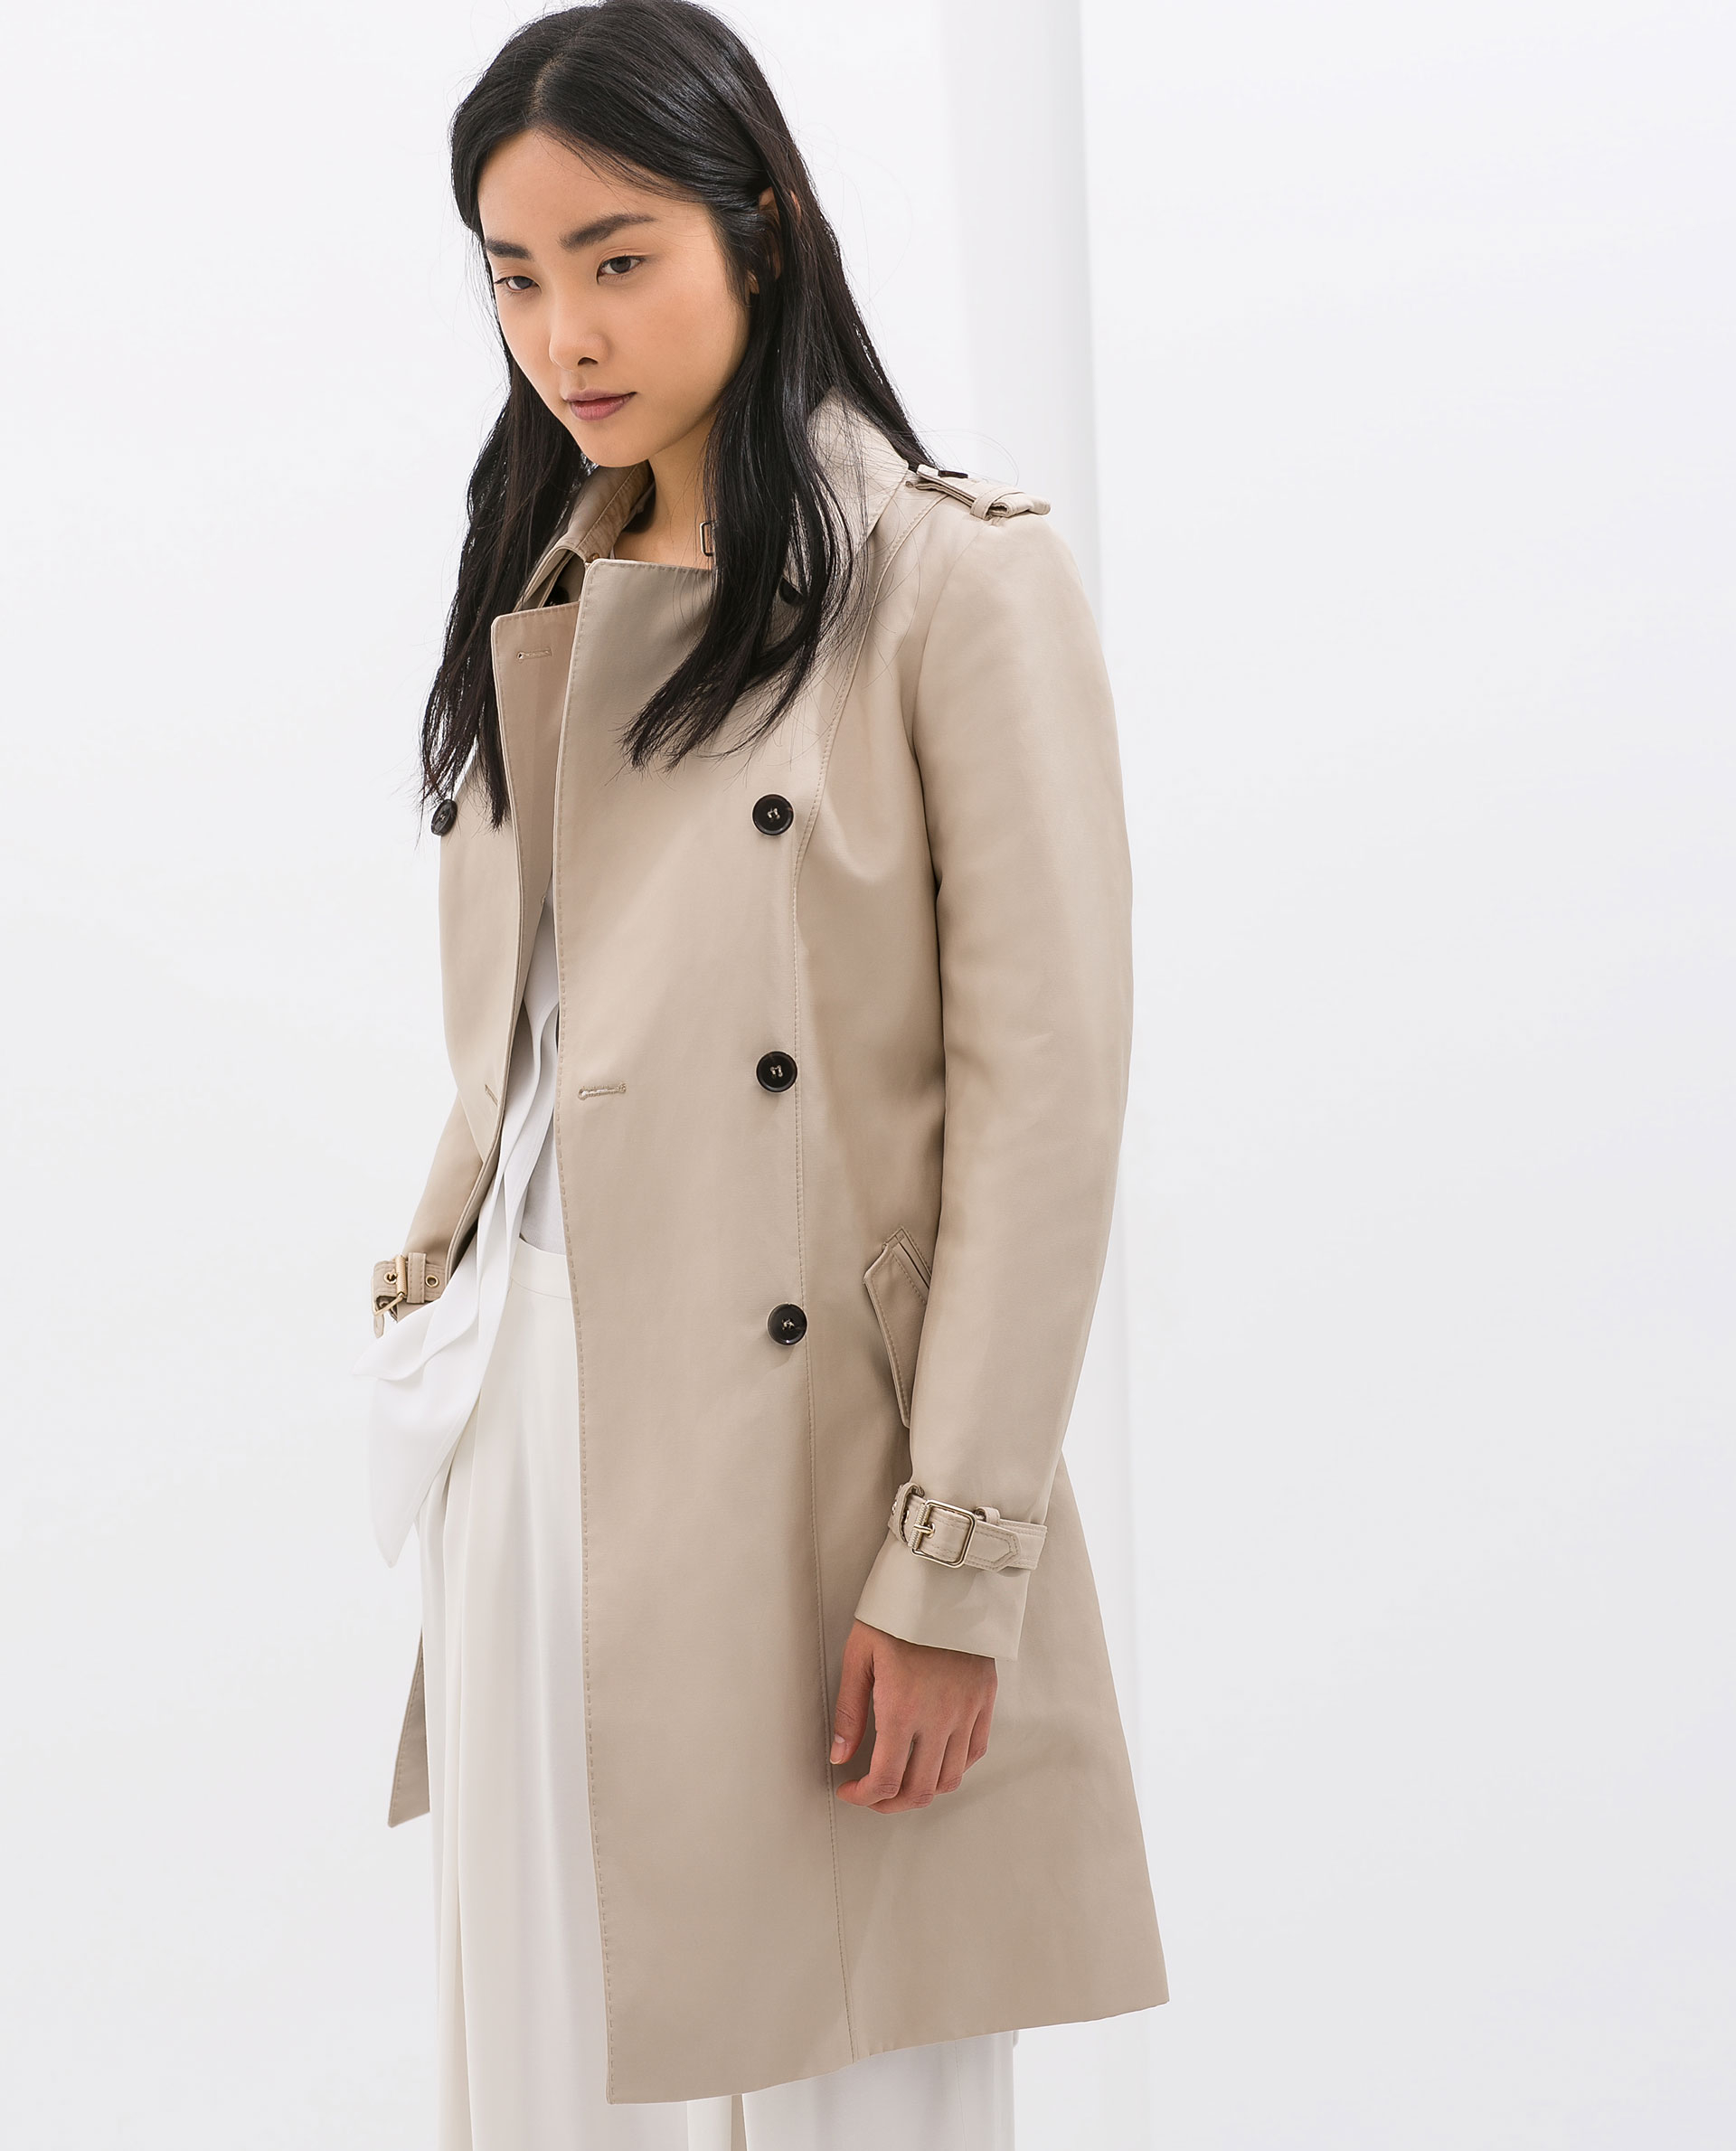 Zara Cotton Trench Coat in Beige | Lyst